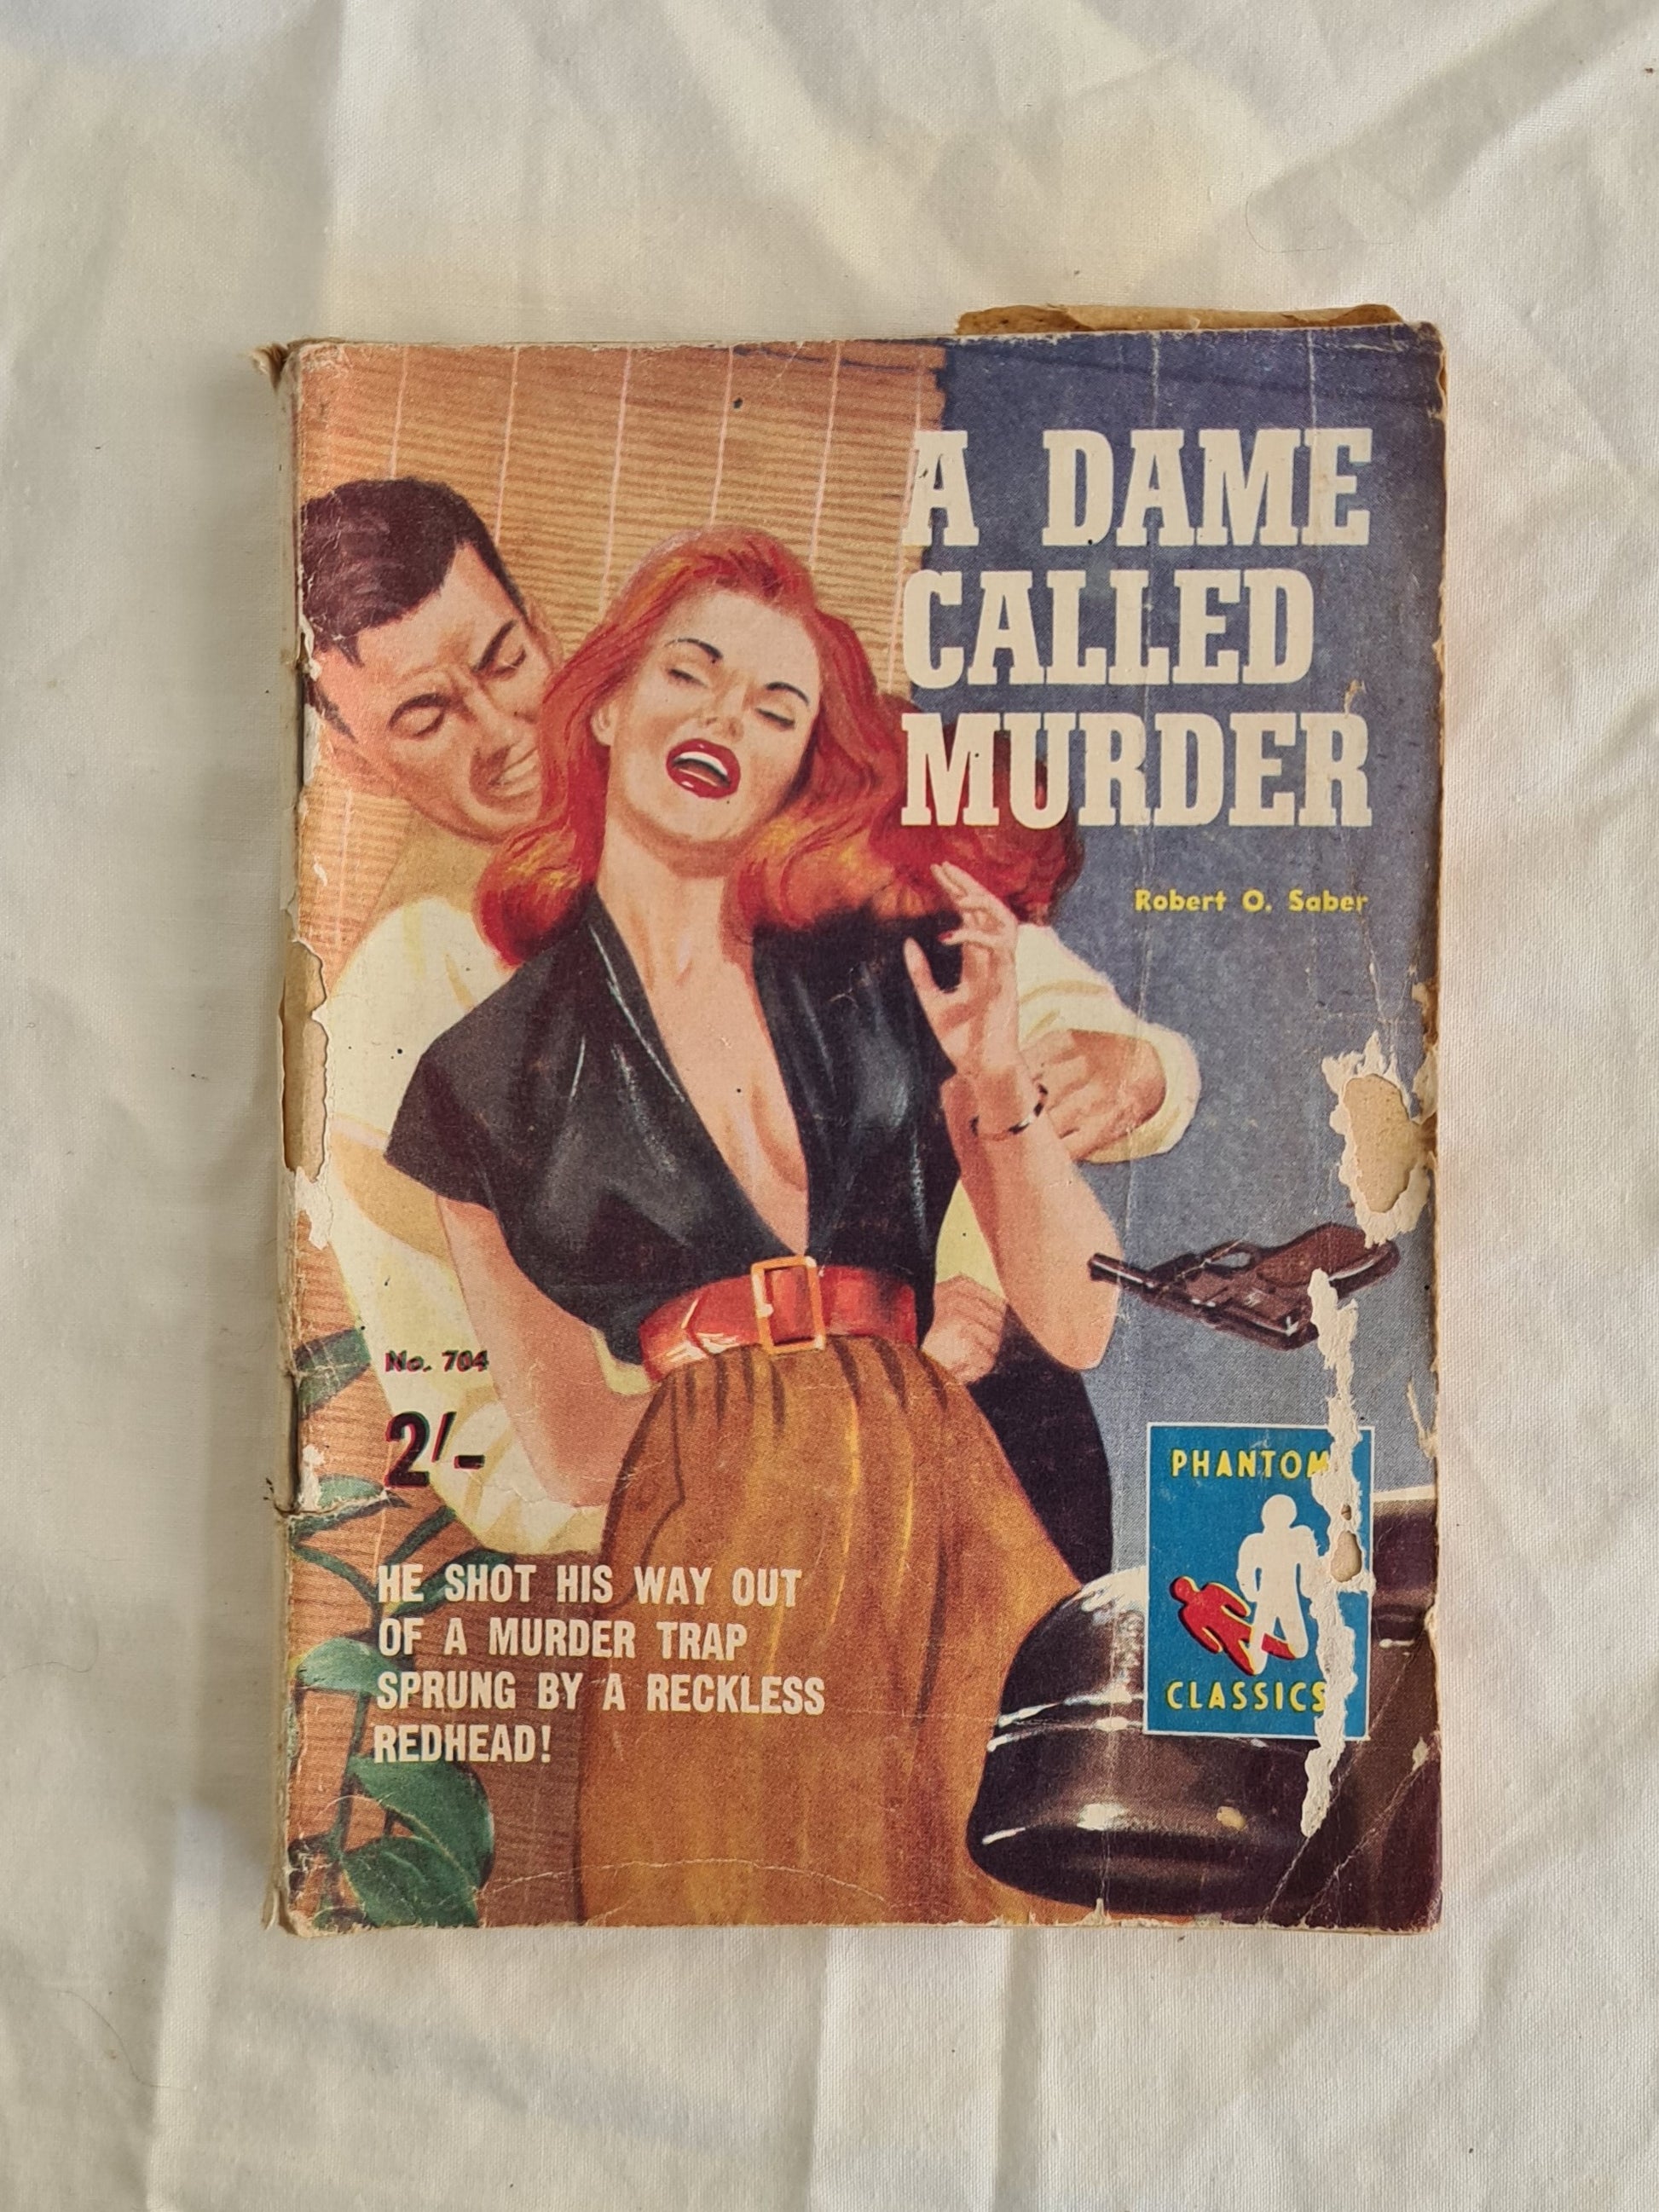 A Dame Called Murder  by Robert O. Saber  Phantom Classics No. 704